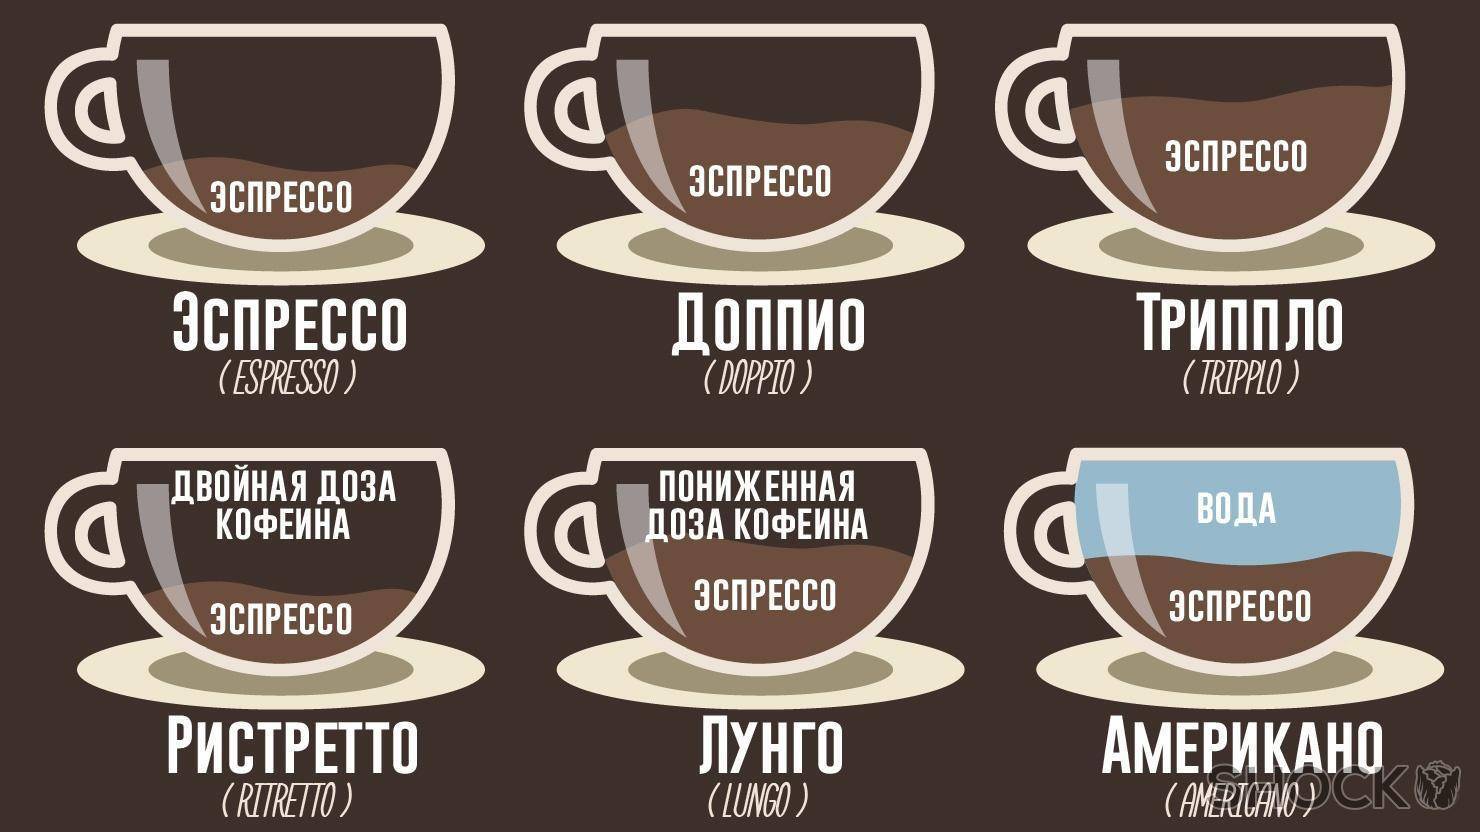 Лунго » энциклопедия кофе кофепедия